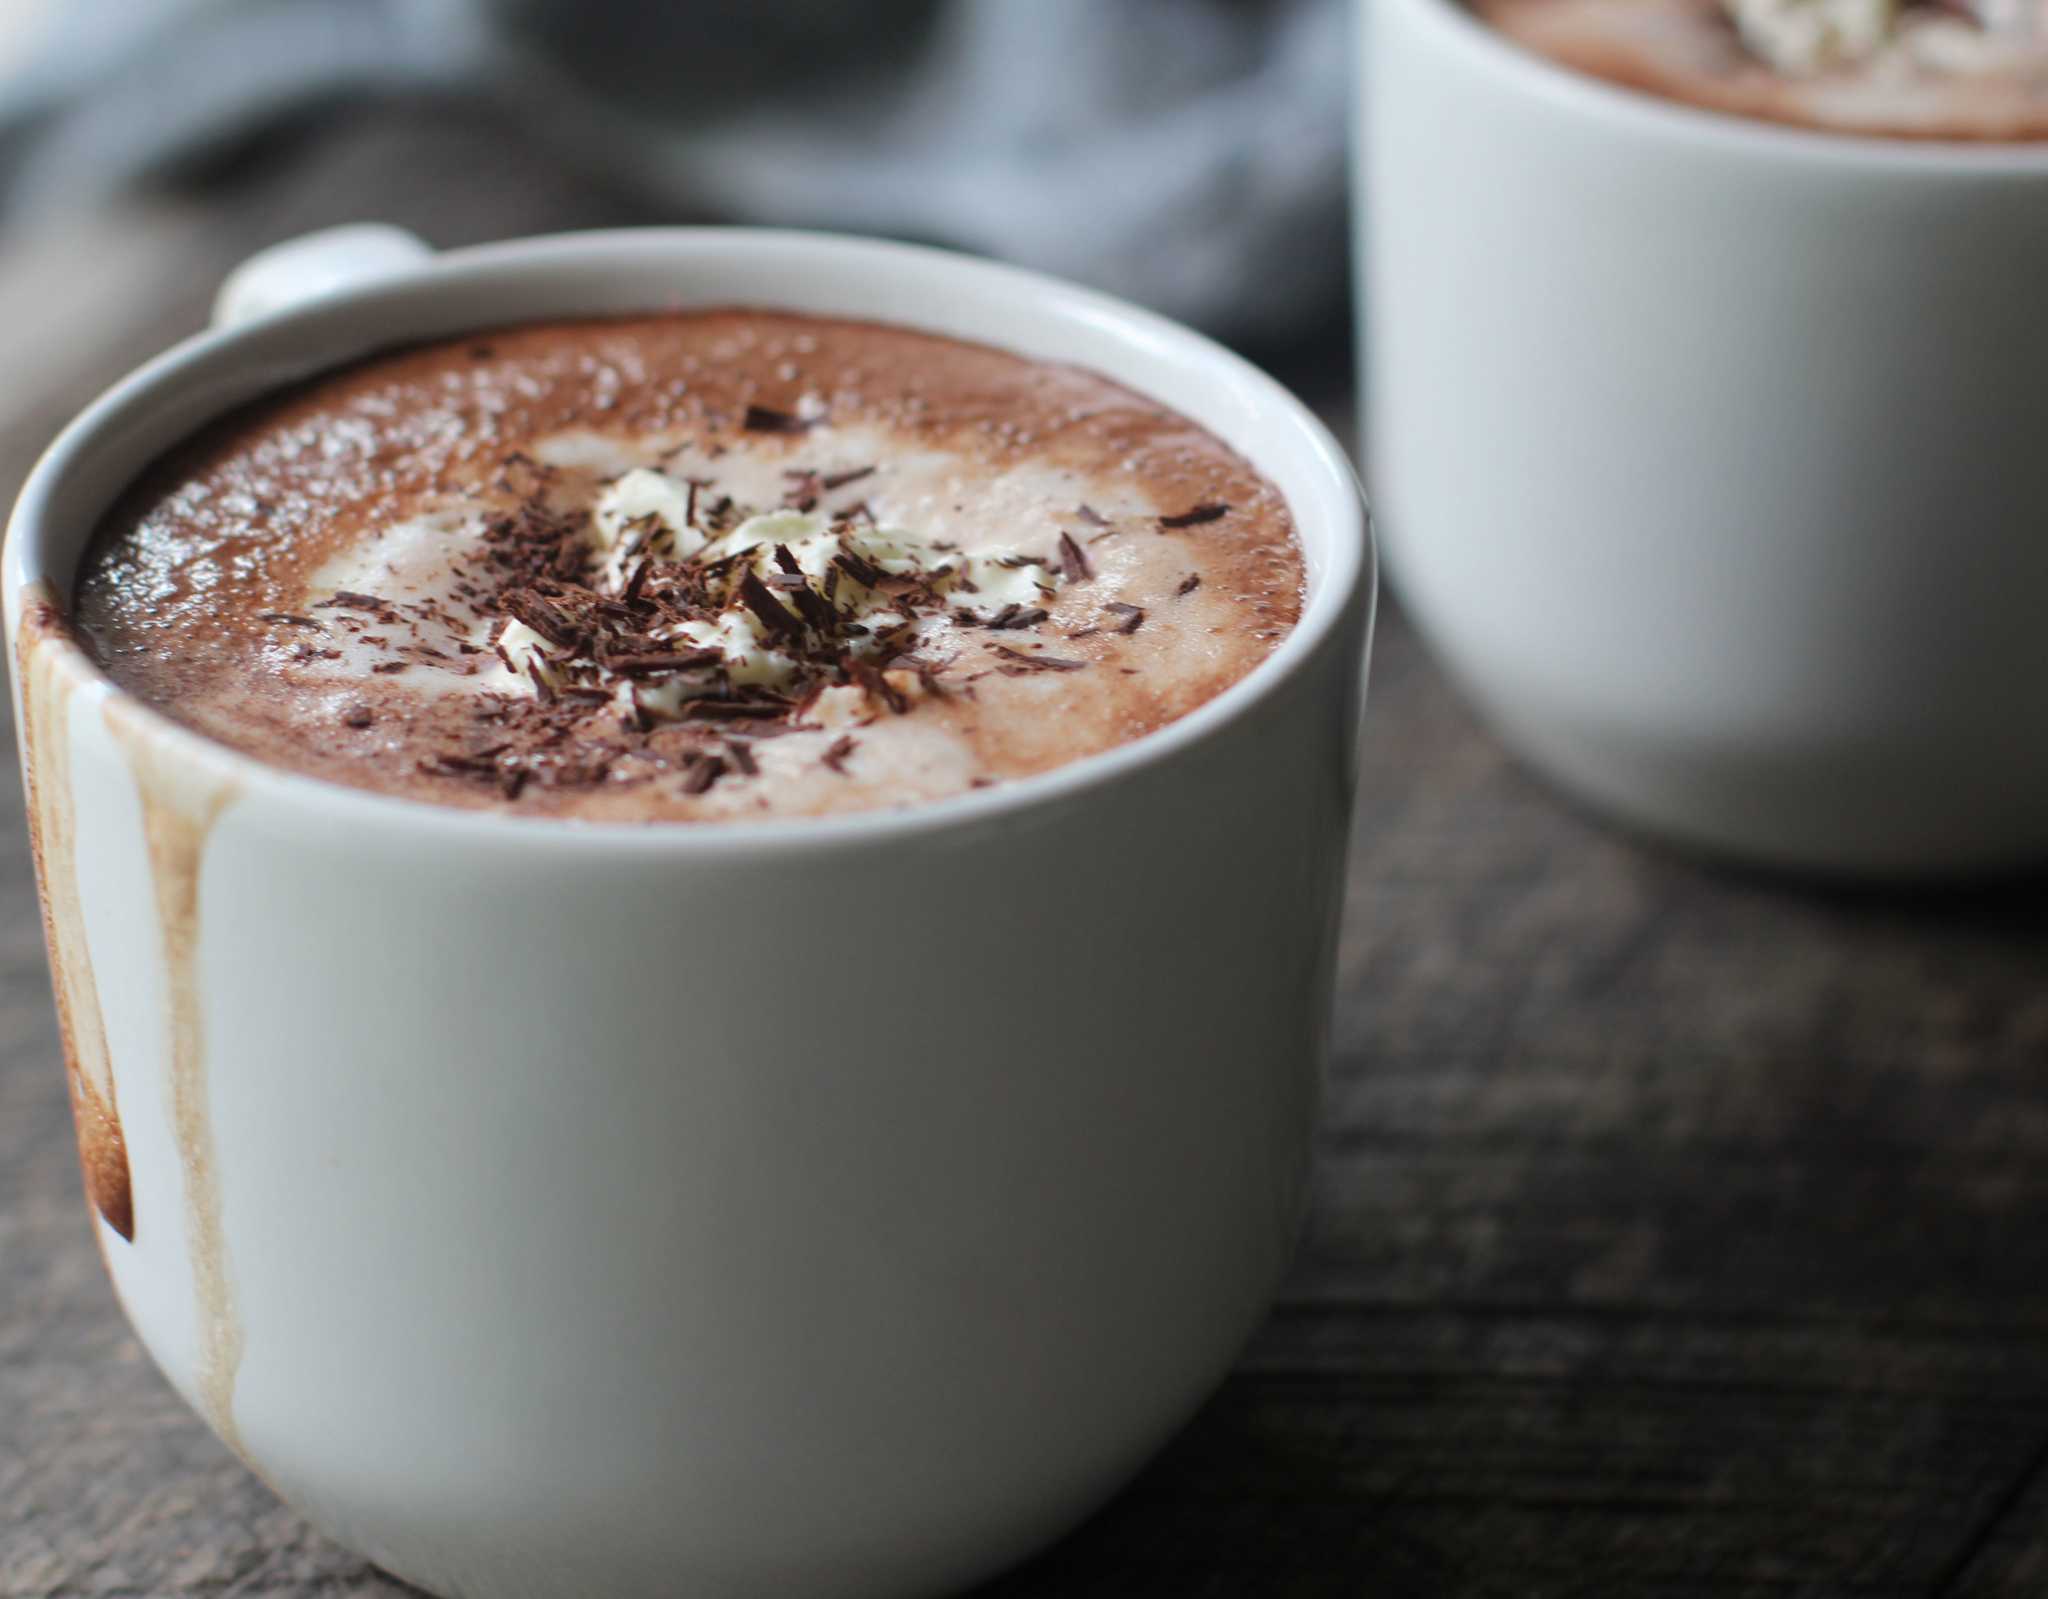 Hot-chocolate